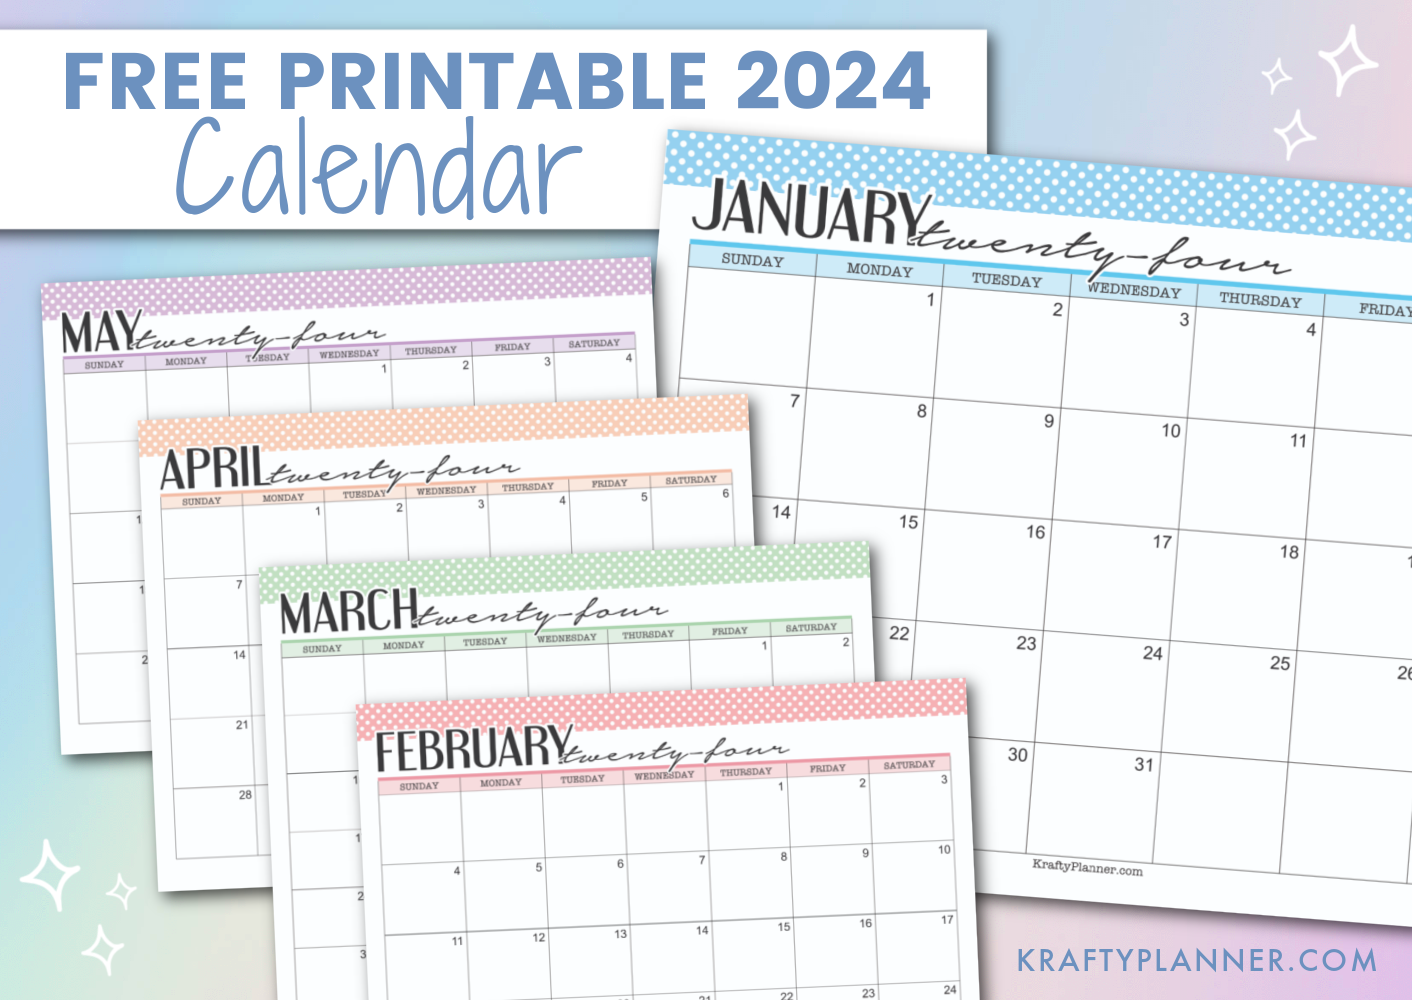 Free Printable 2024 Calendars (Color) — Krafty Planner for Printable Coloring Calendar 2024